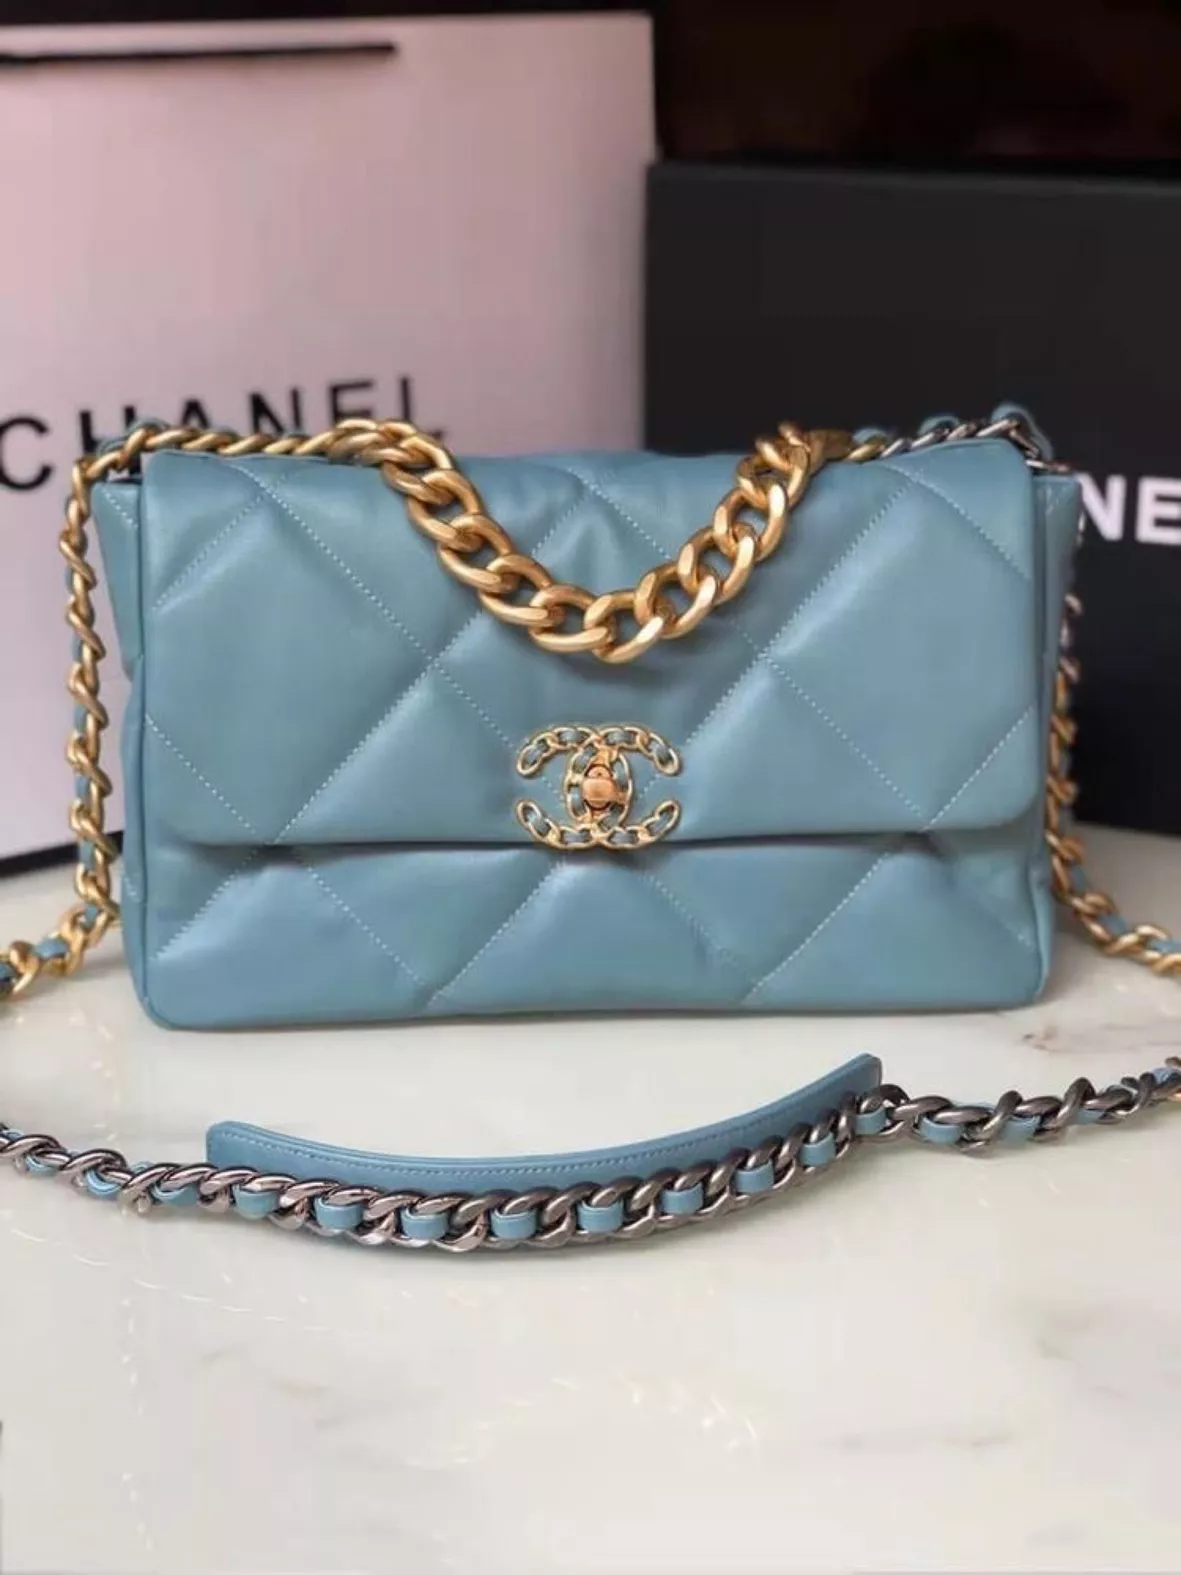 Dhgate Louis Vuitton Chanel Bags Unboxing Rewiew 